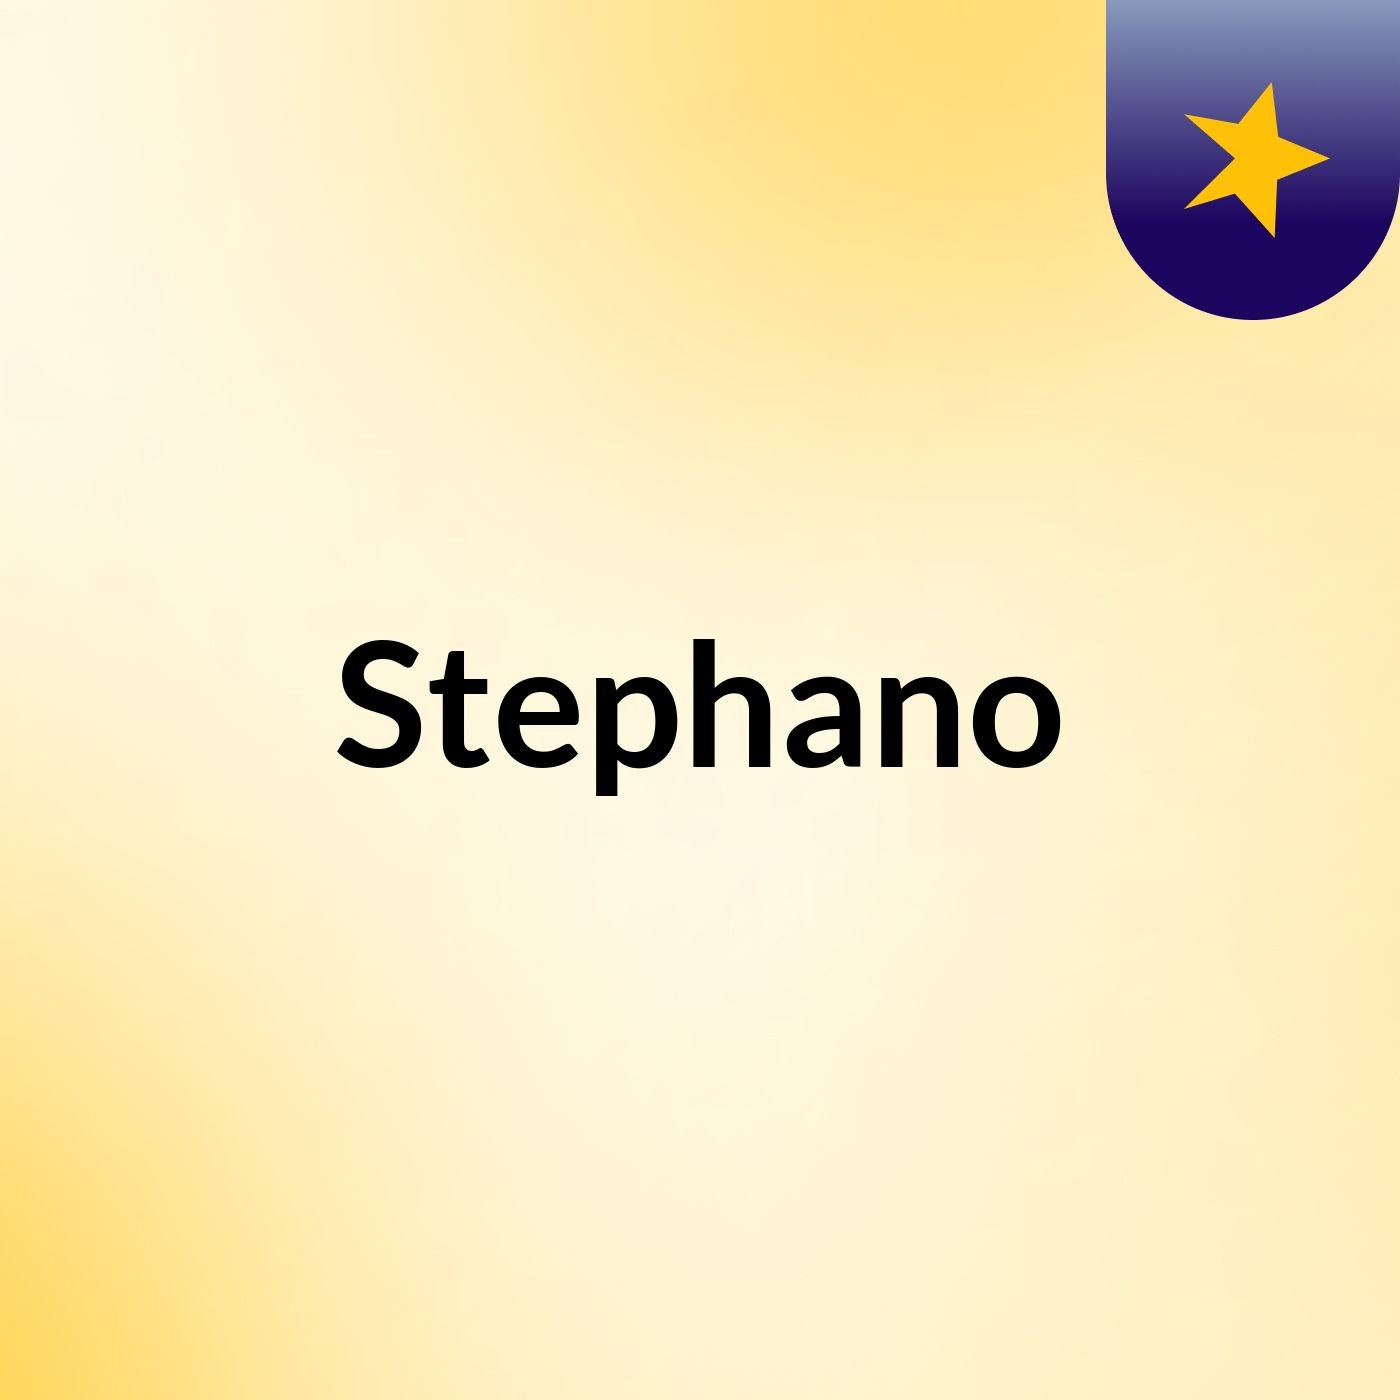 Episode 3 - Stephano